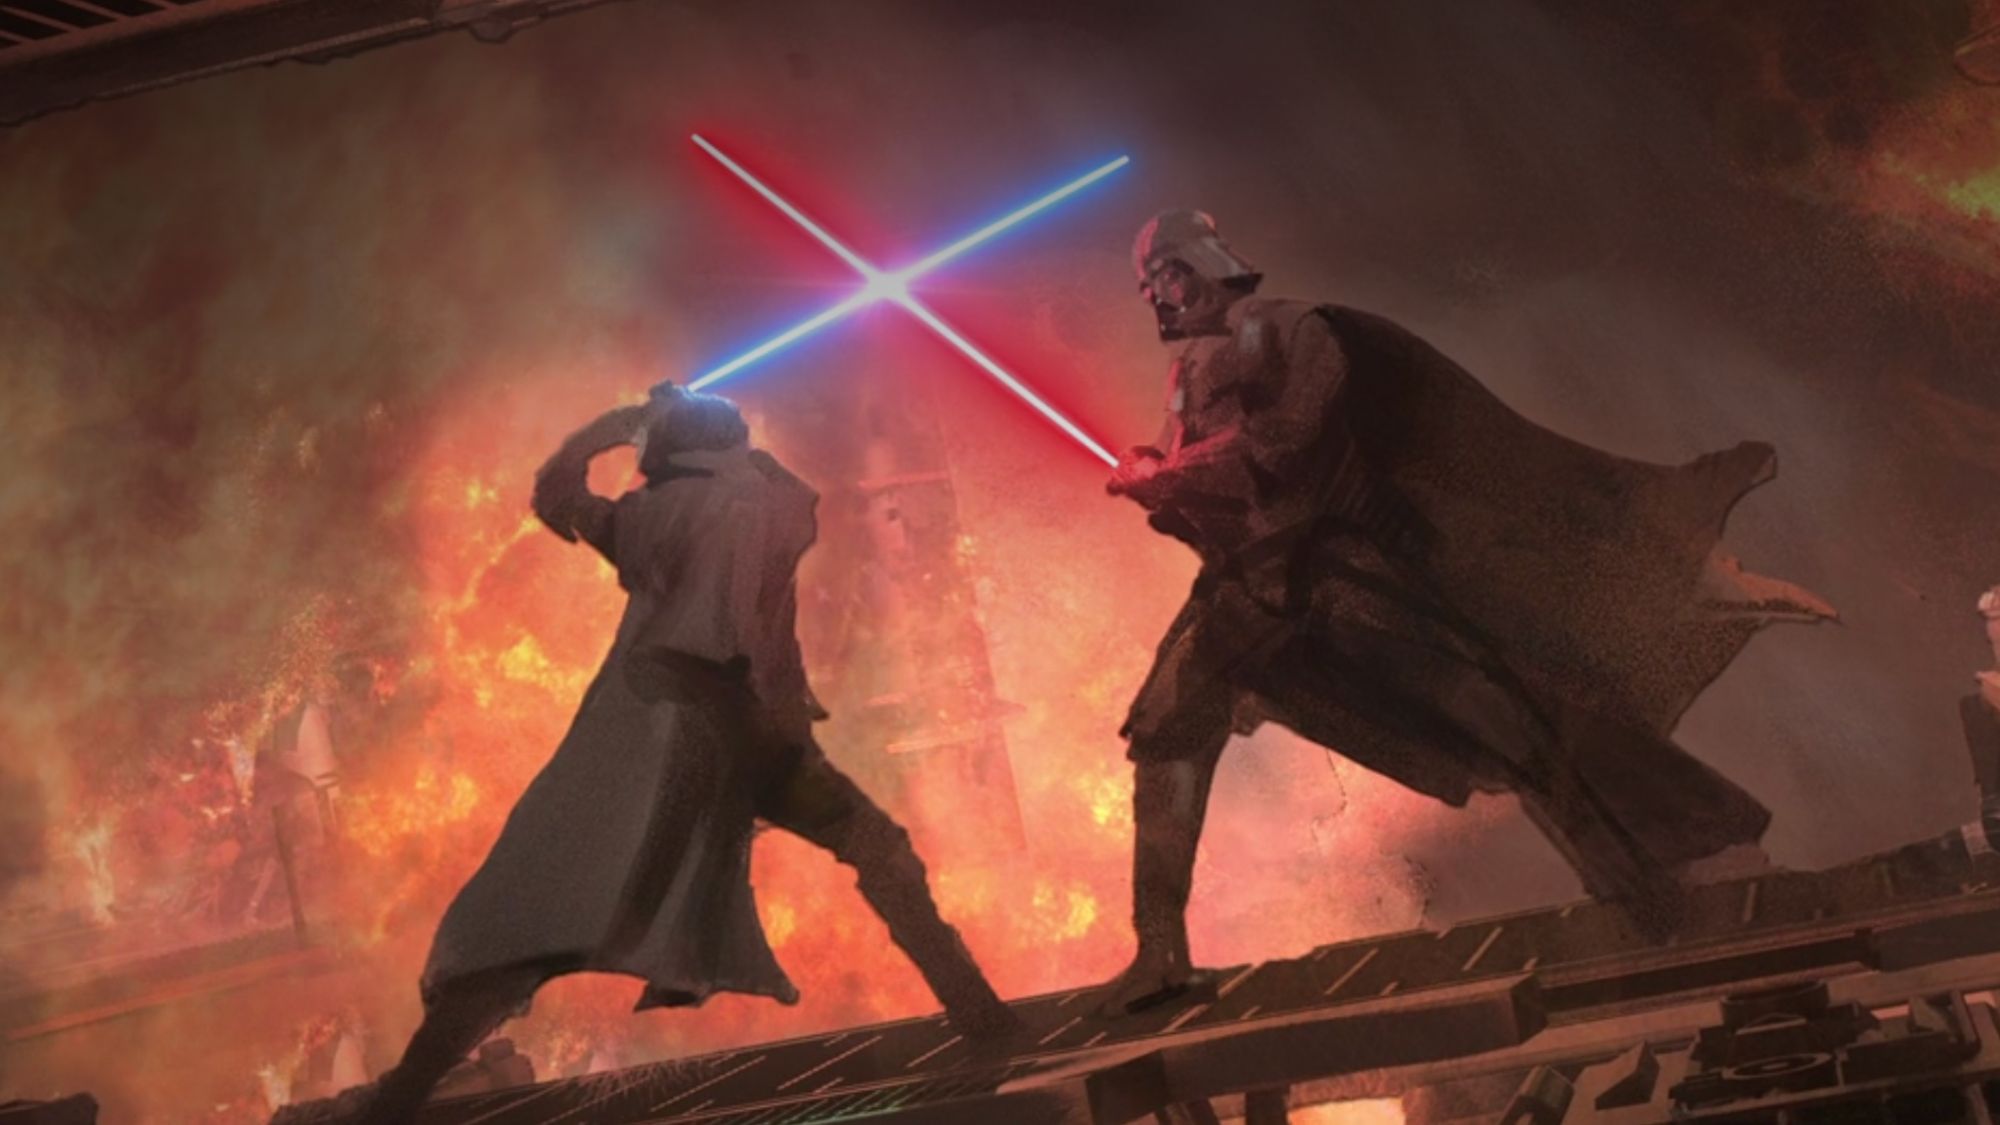 Obi-Wan Kenobi concept art featuring Obi-Wan Kenobi and Darth Vader in a lightsaber duel